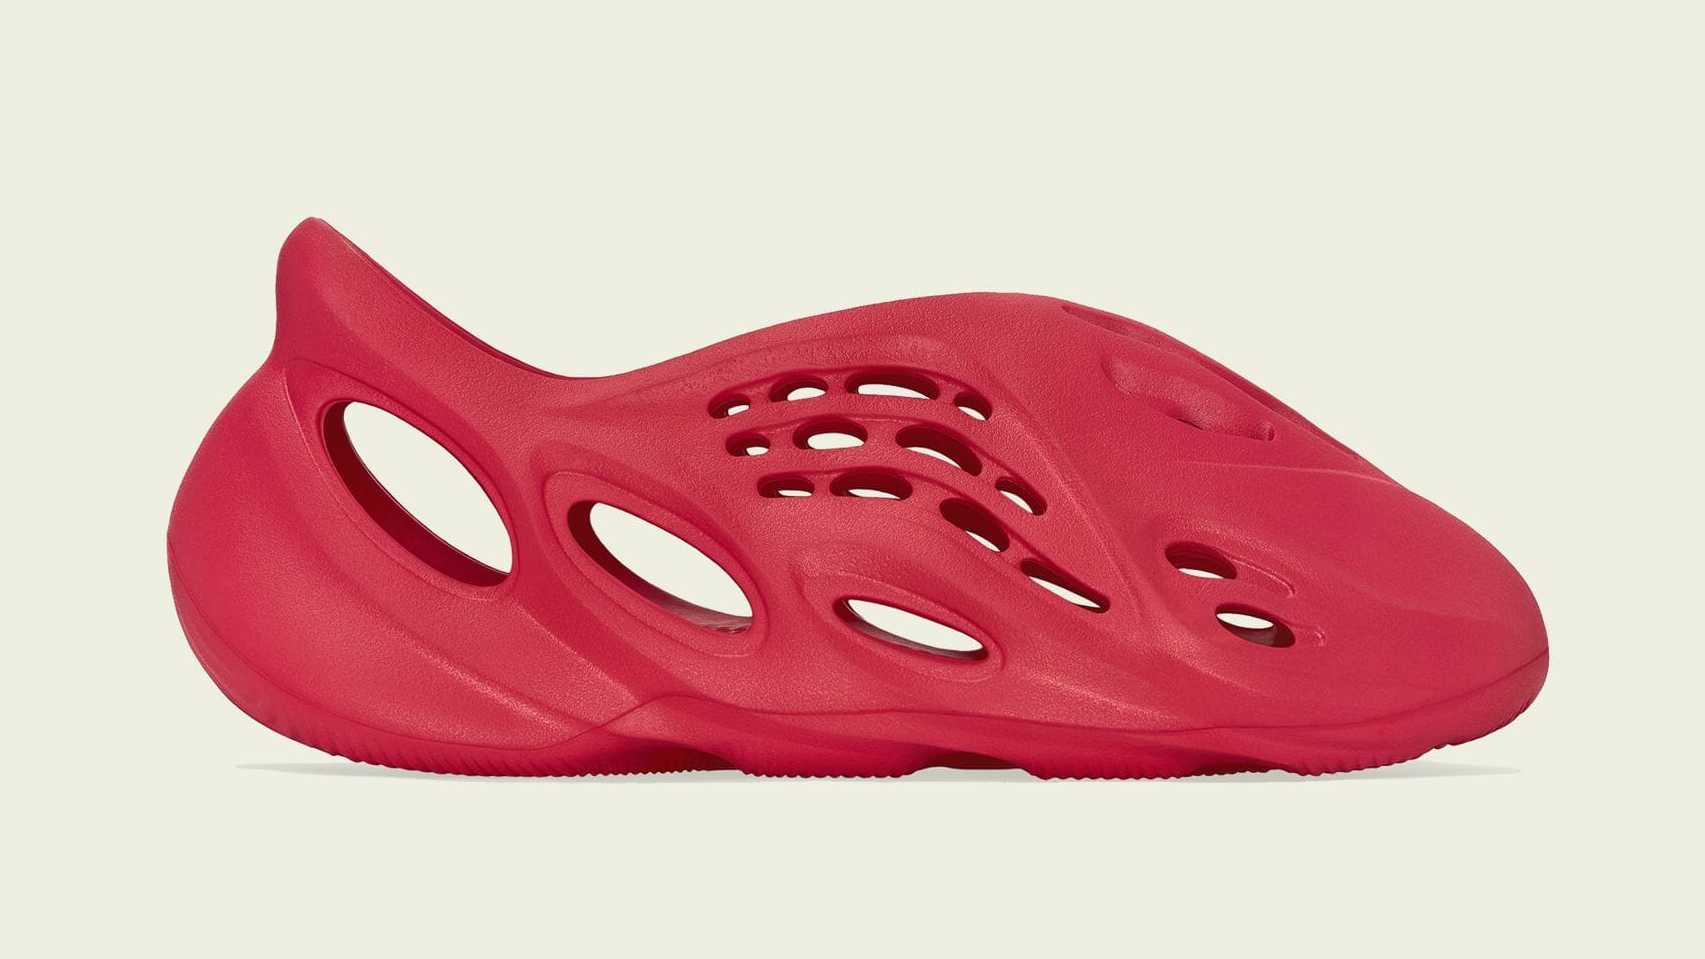 Adidas Yeezy Foam Runner 'Vermillion' GW3355 (Lateral)